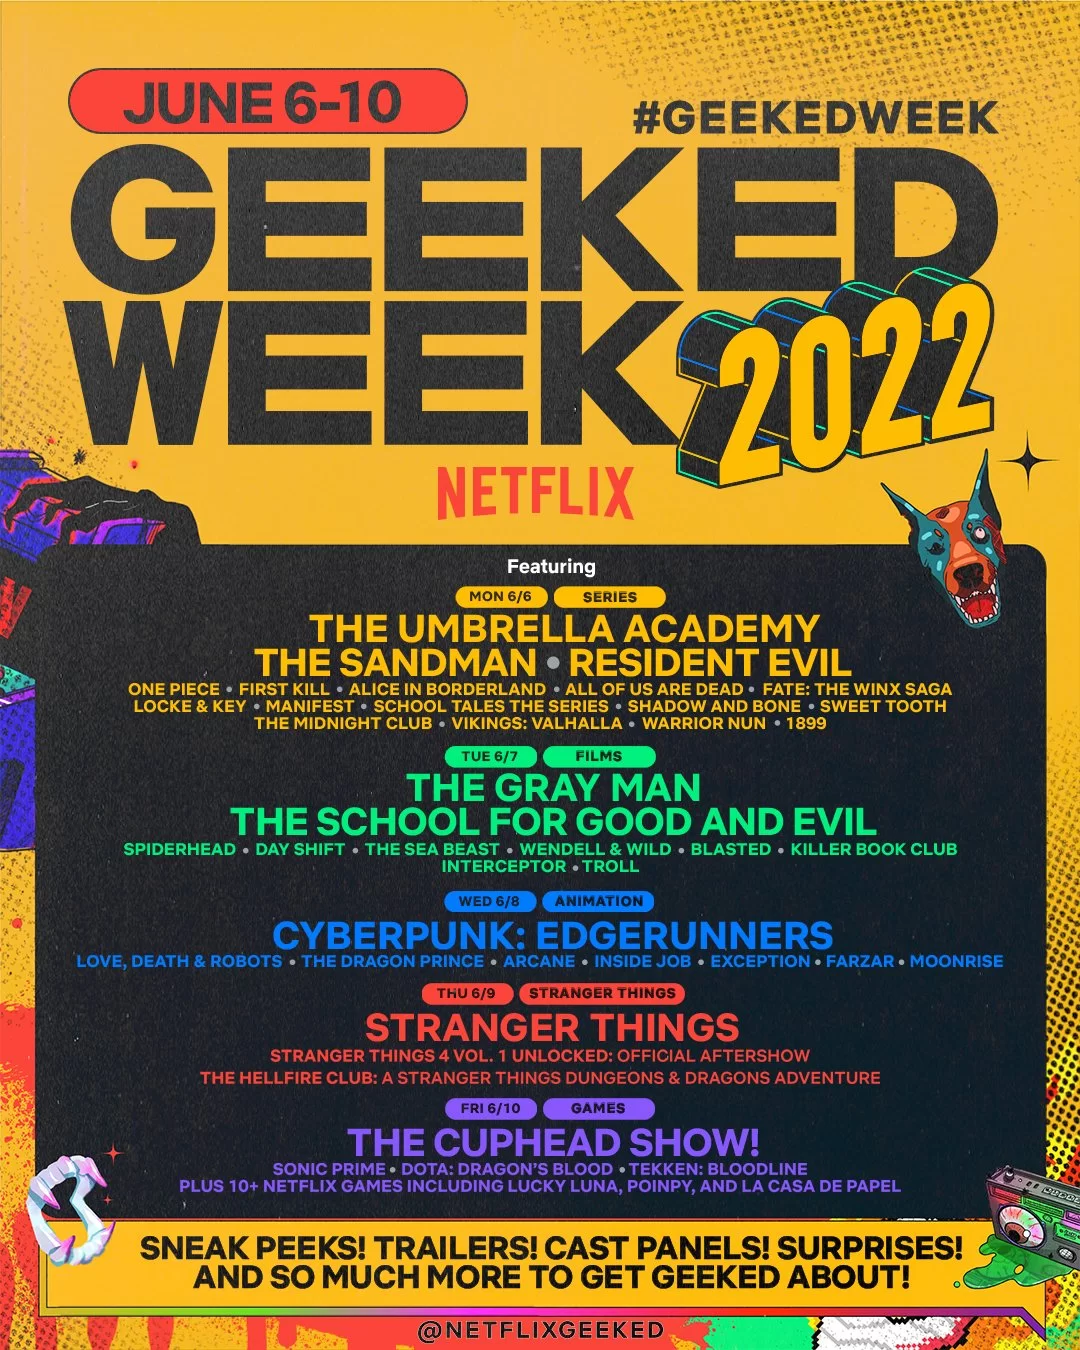 agenda completa de la semana geek